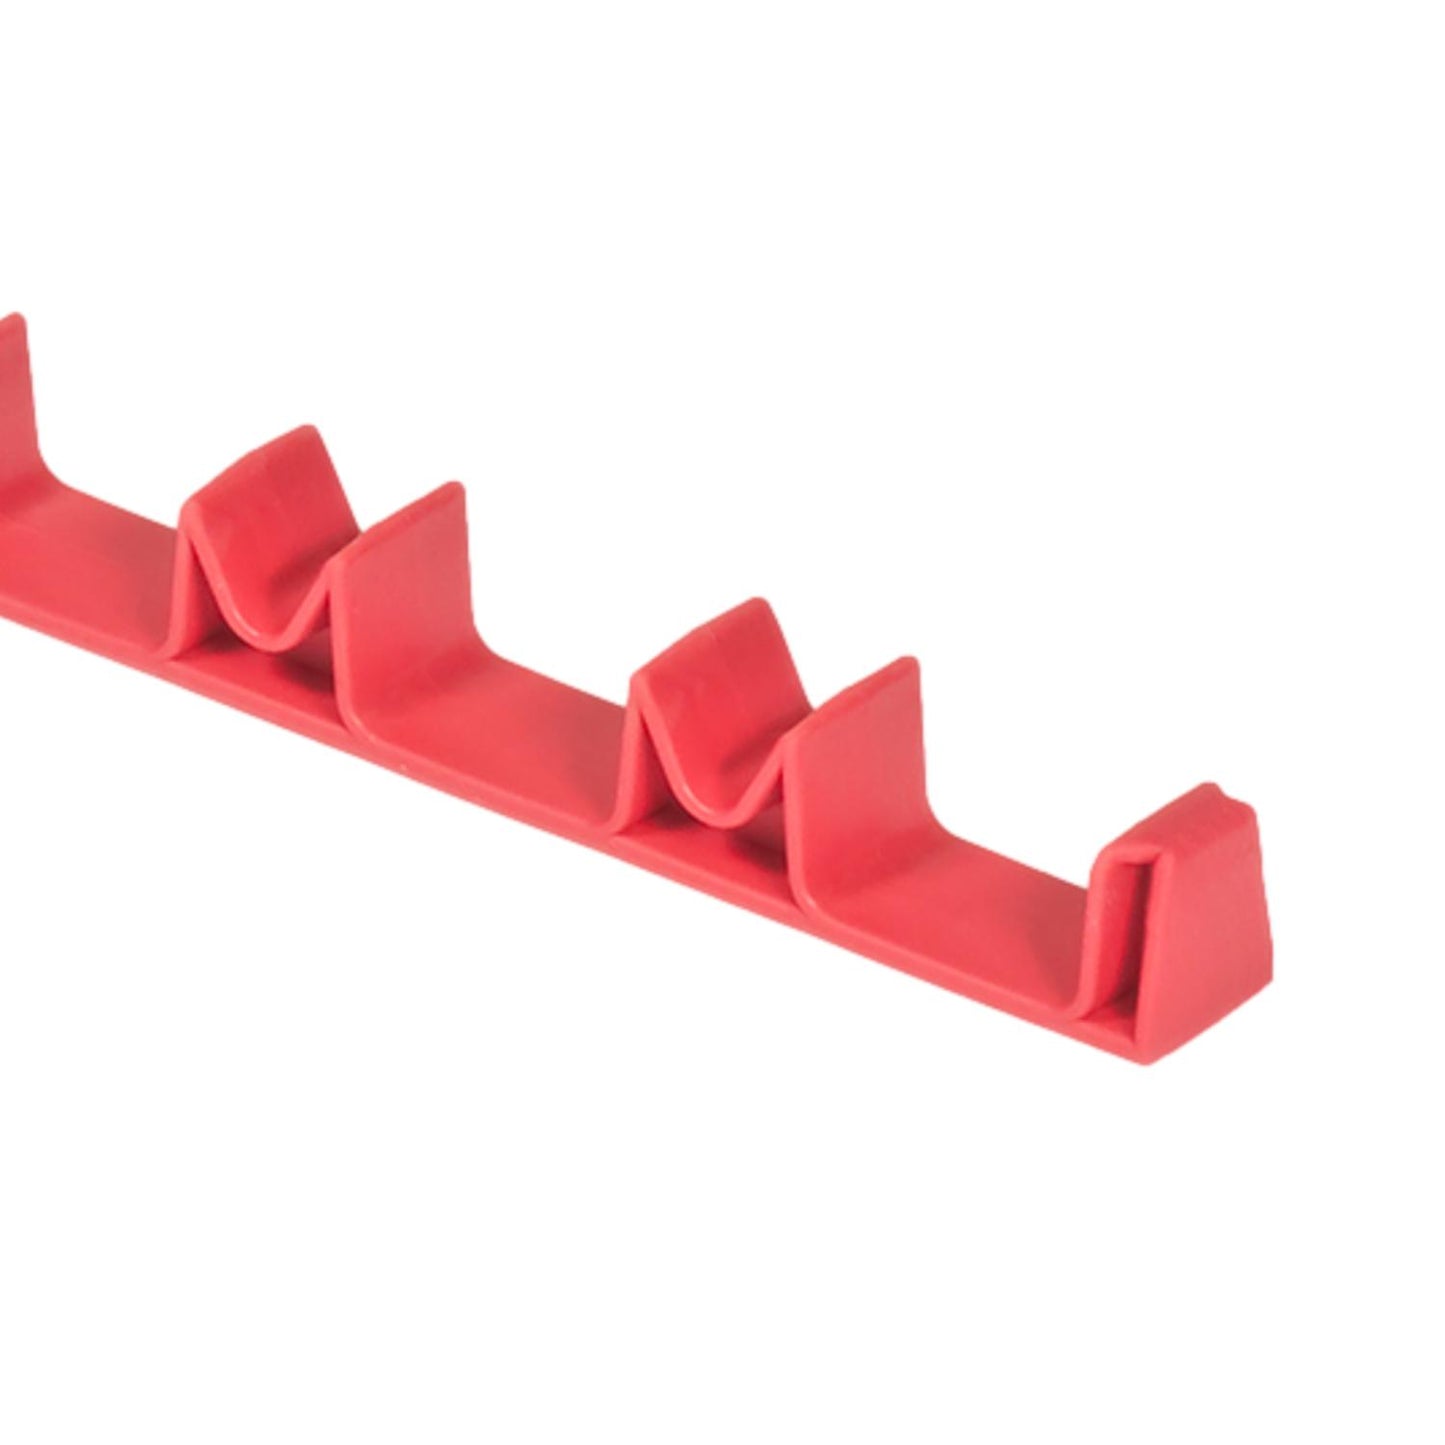 Ernst 14 Tool “No Slip” Low Profile Screwdriver Rail Set Red 6040